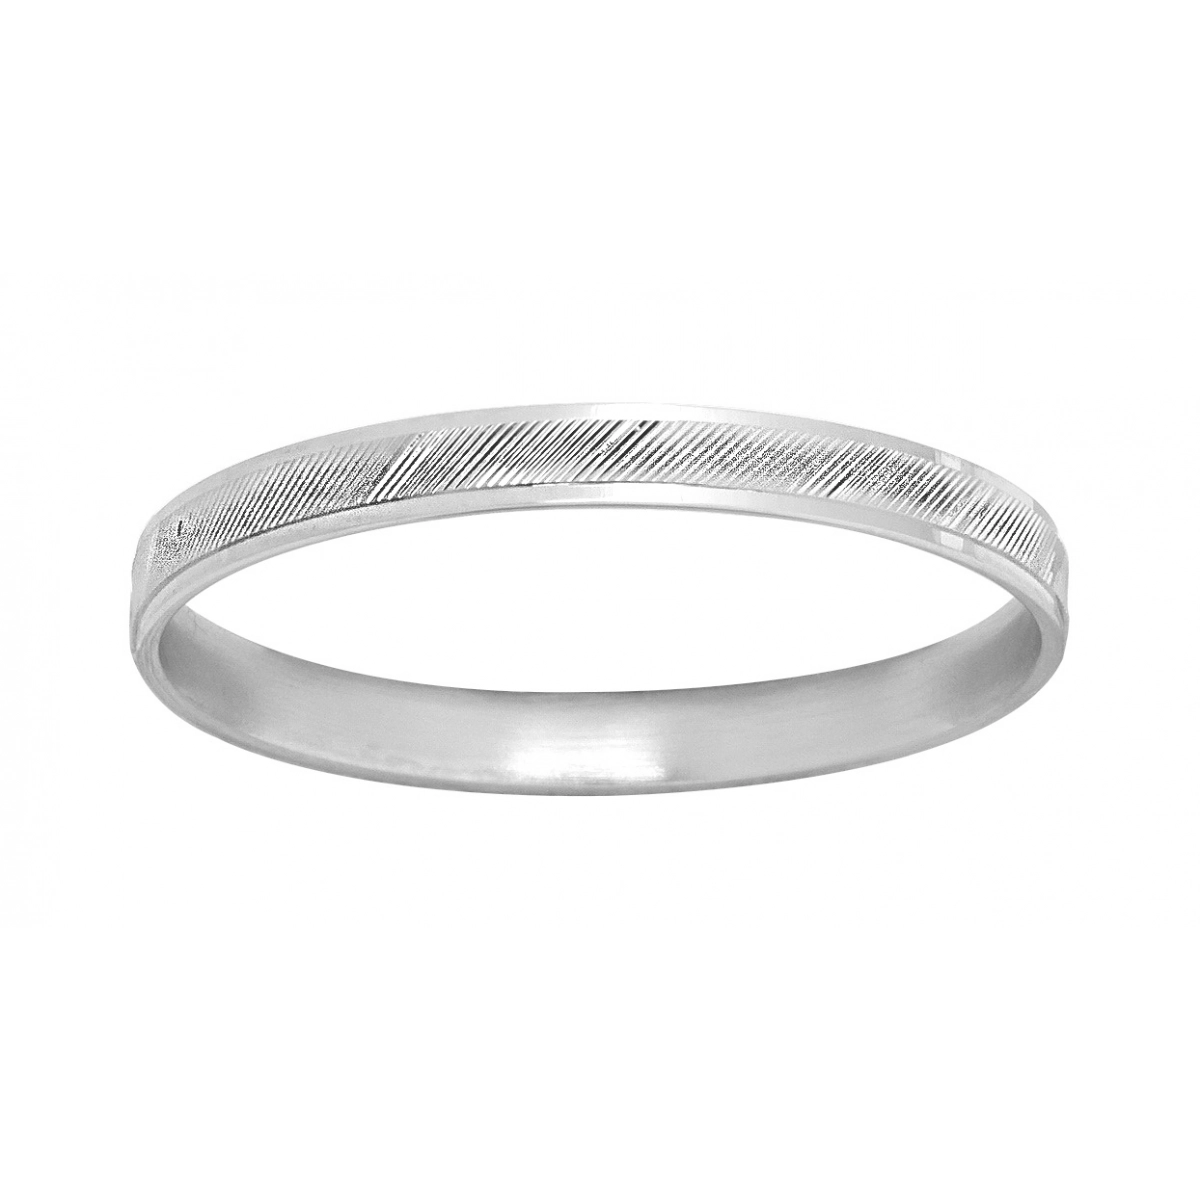 Wedding ring 925 Silver  - Size: 66  Lua Blanca  S37.02225.26